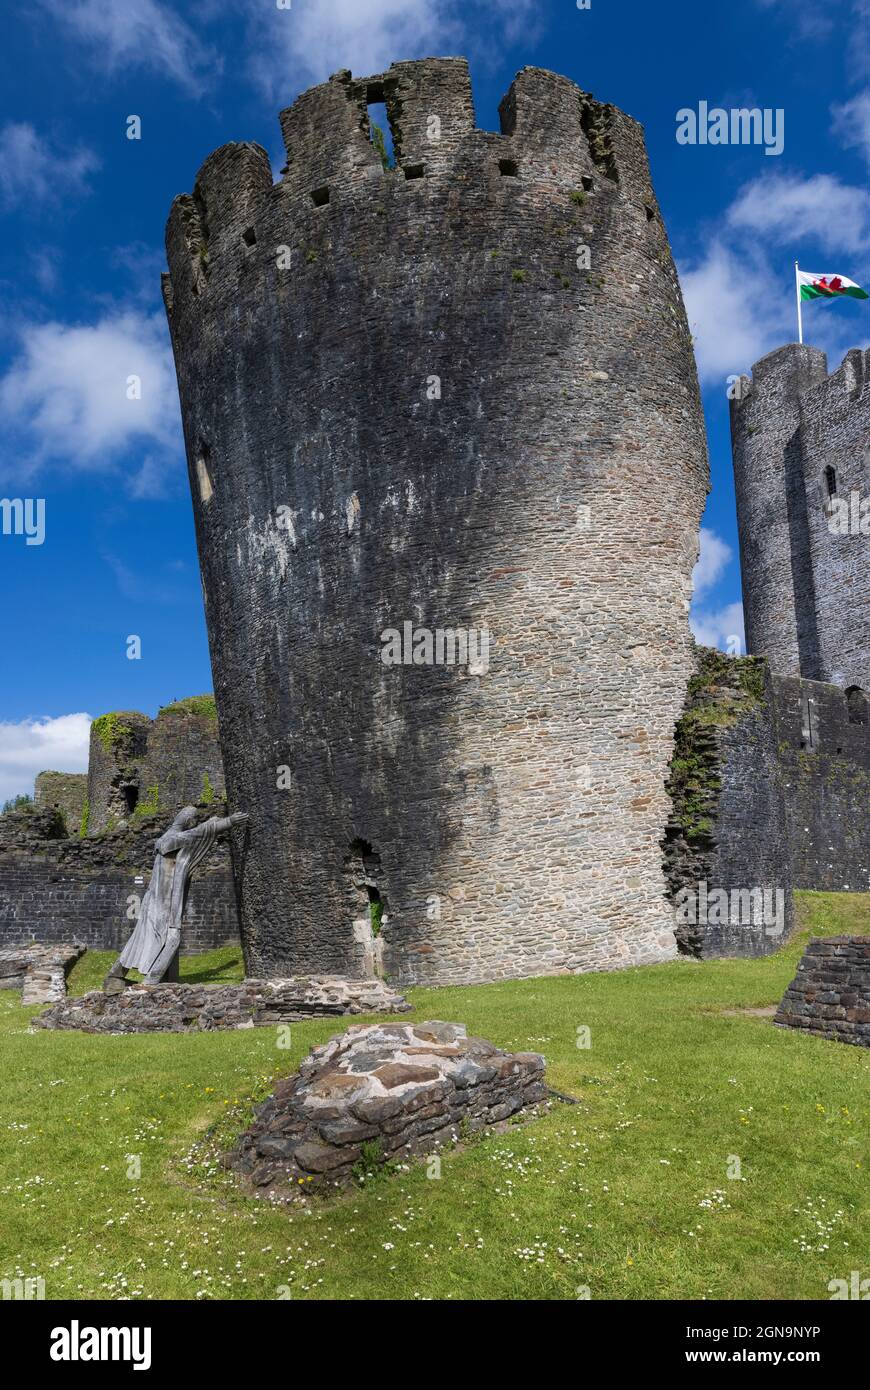 La inclinada torre sudeste del castillo de Caerphilly, Gales, Reino Unido Foto de stock